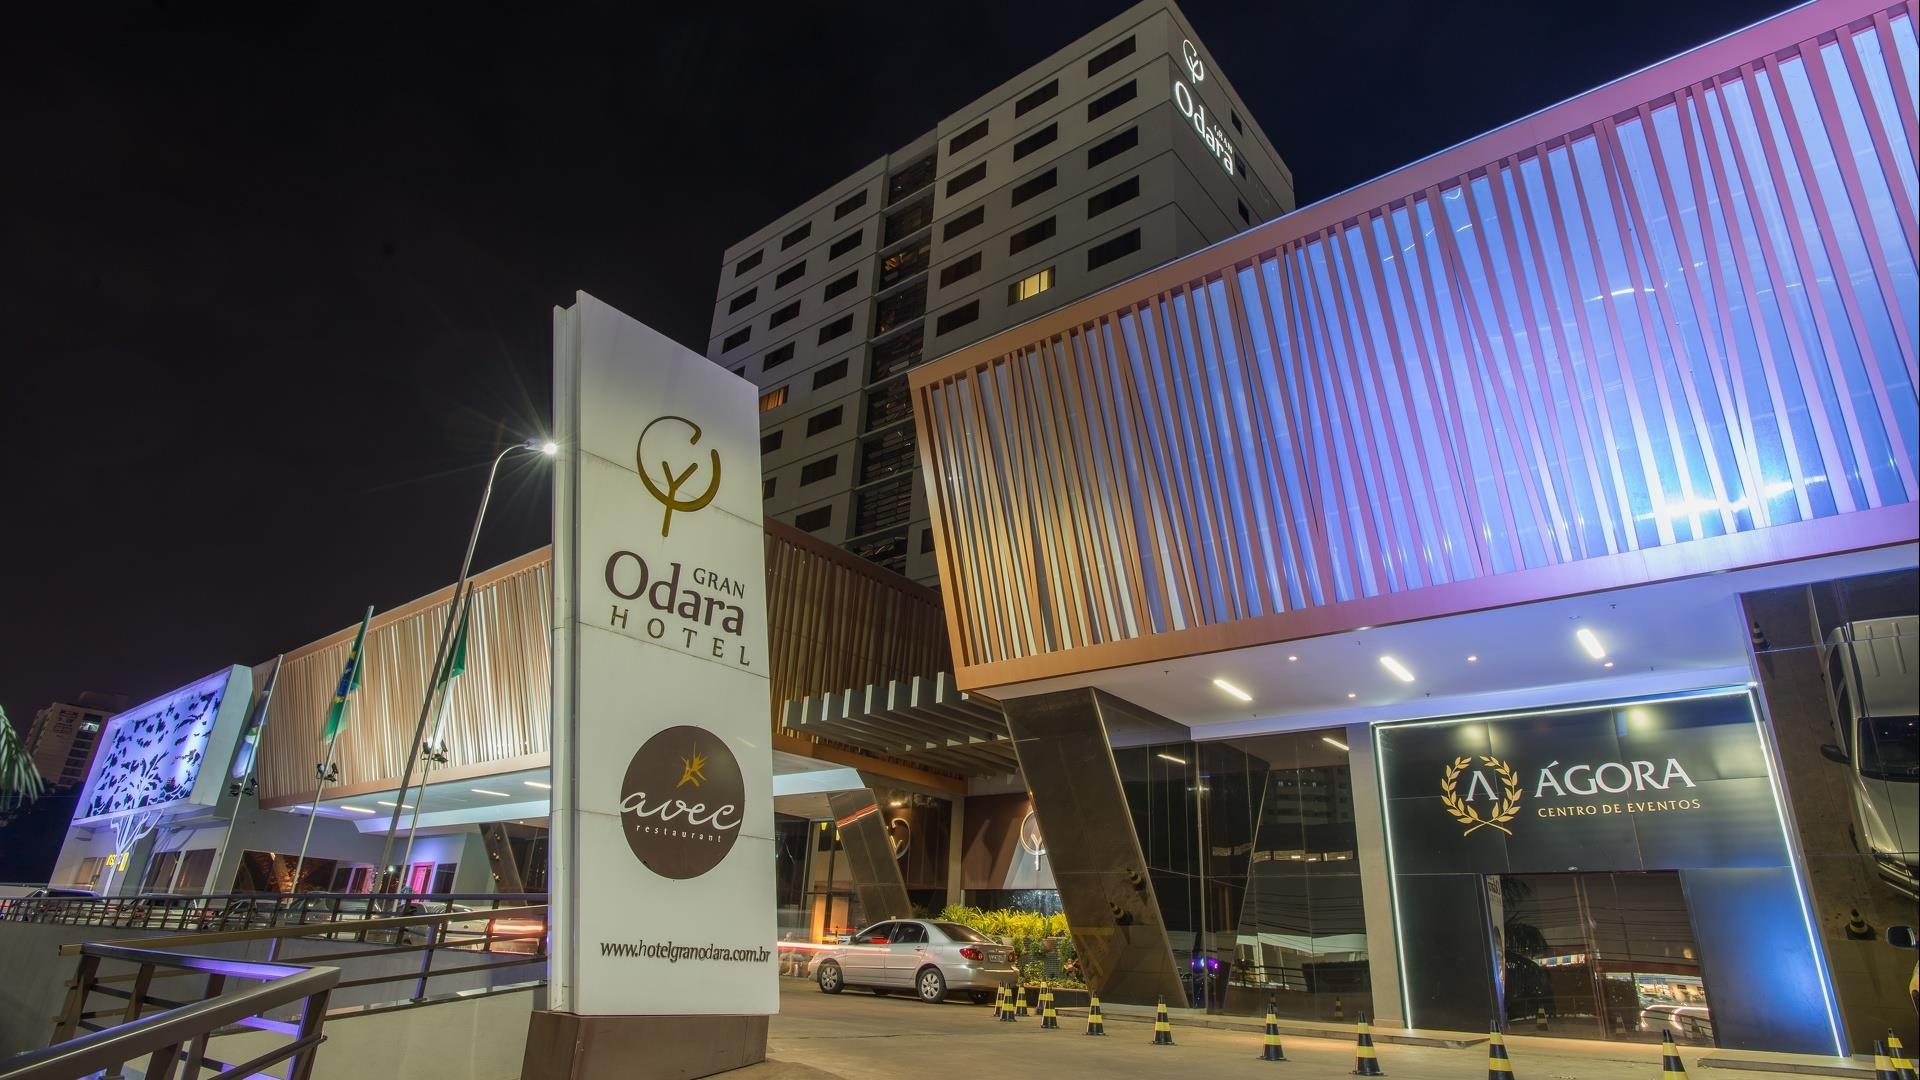 Deluxe Hotel in Cuiaba - Hotel Gran Odara 